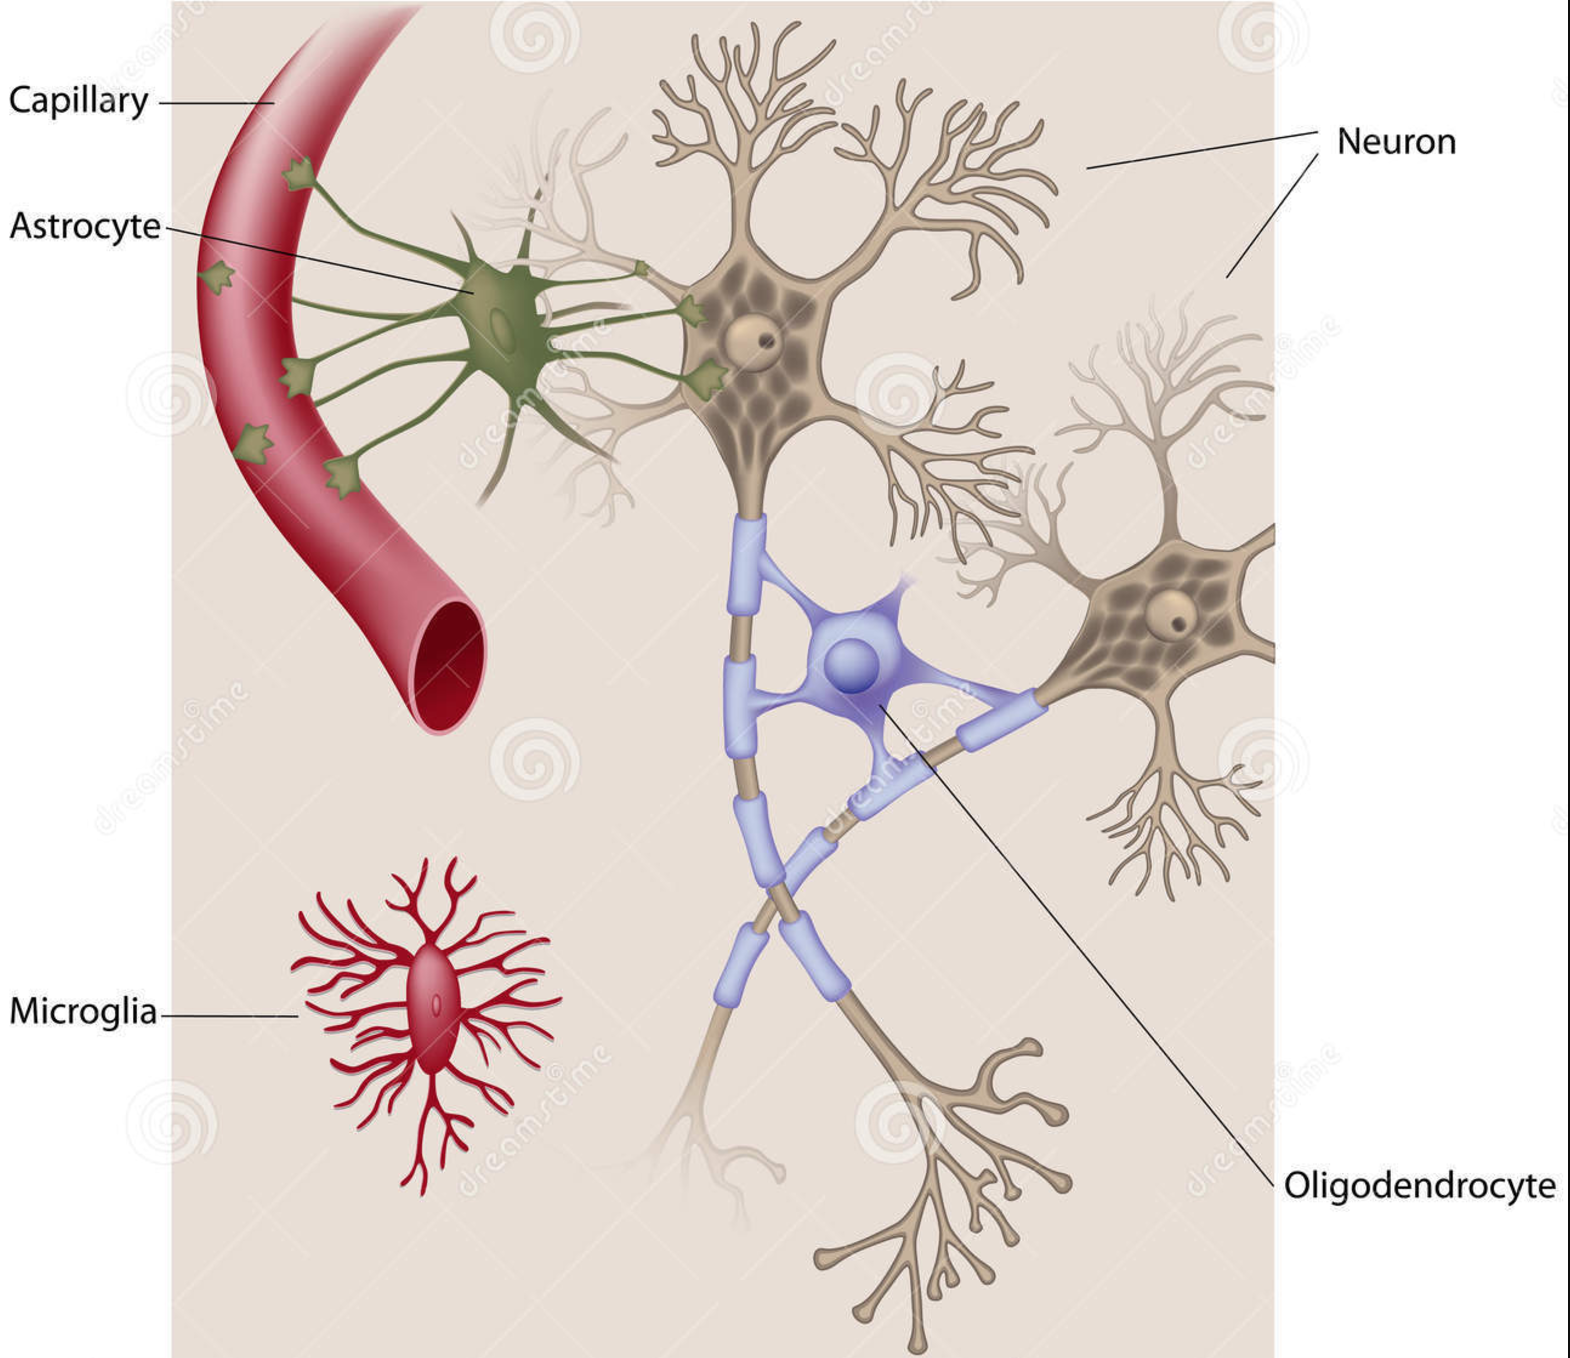 Illustration of biological Capillary-Astrocyte-Neuron complex